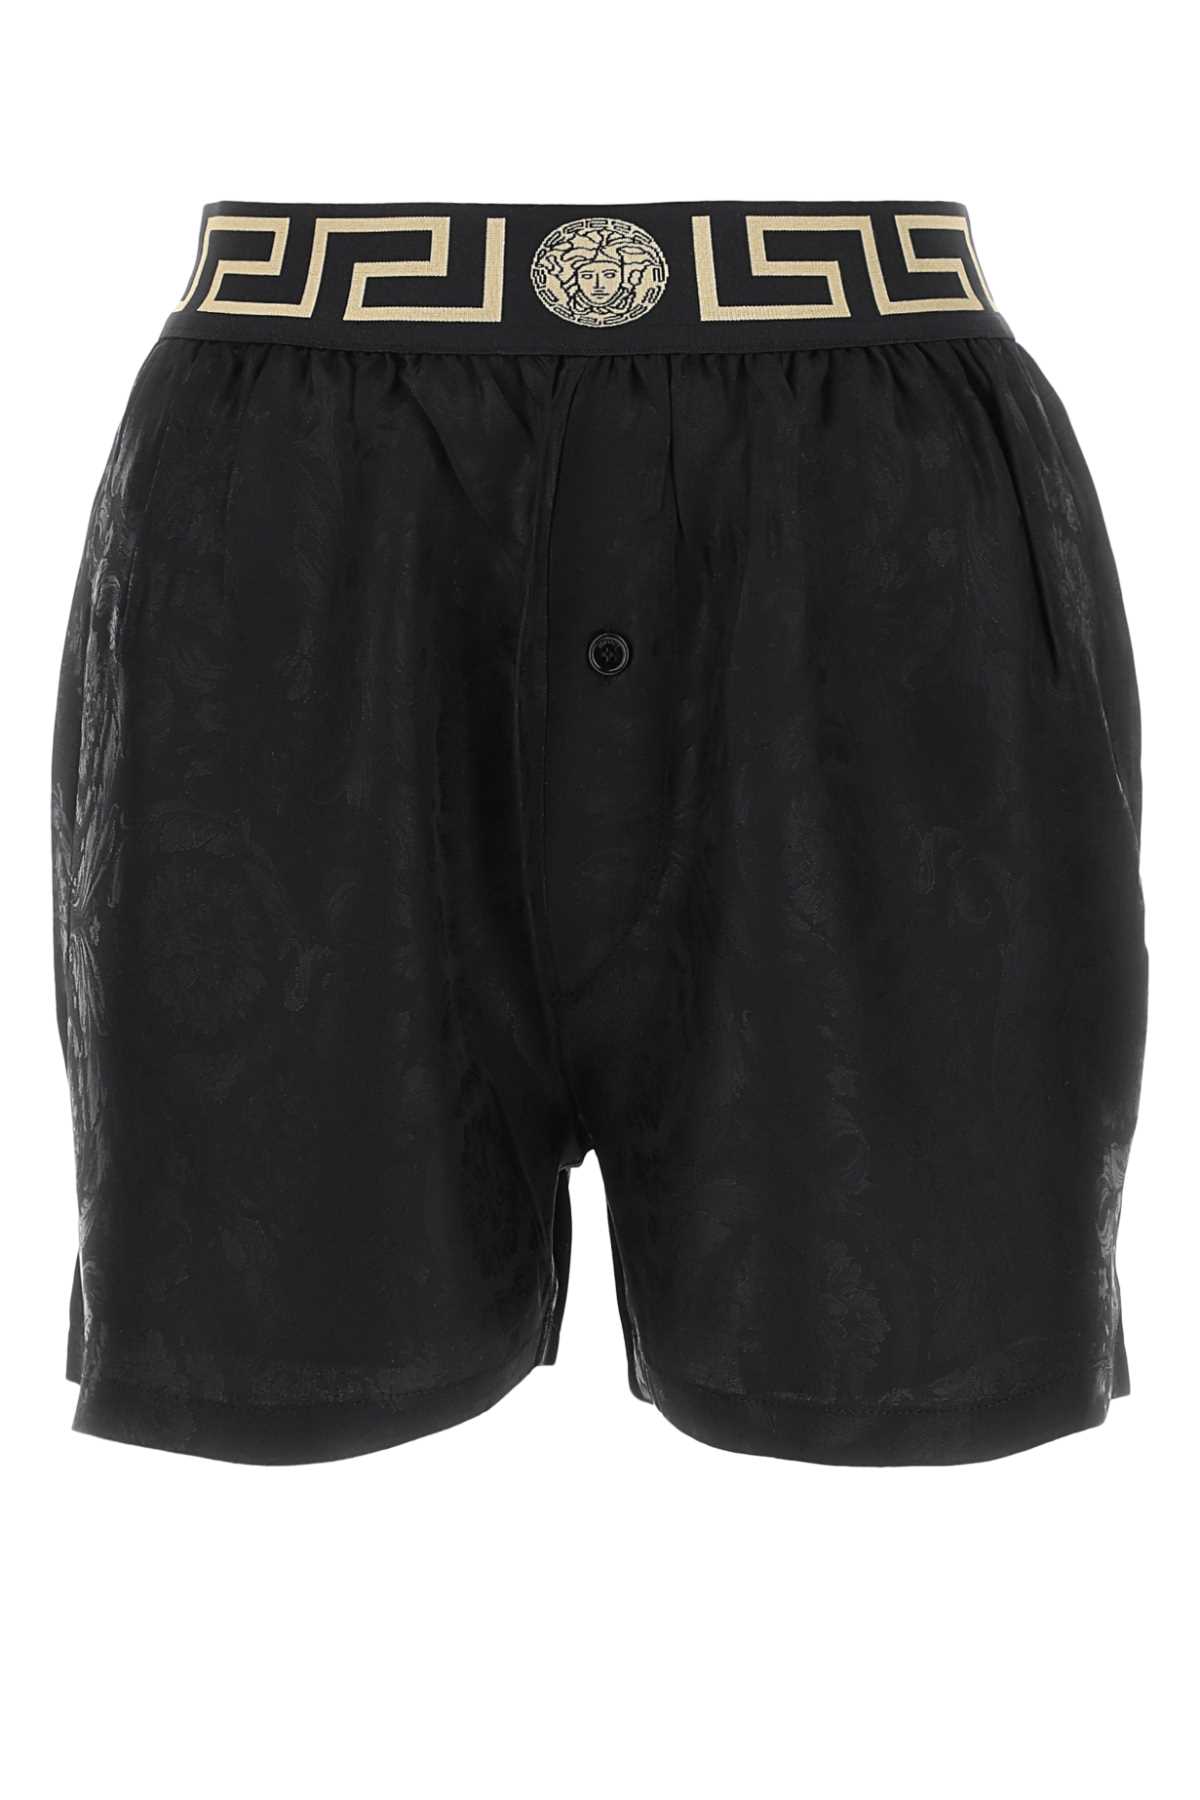 Versace Black Satin Pyjama Bermuda Shorts